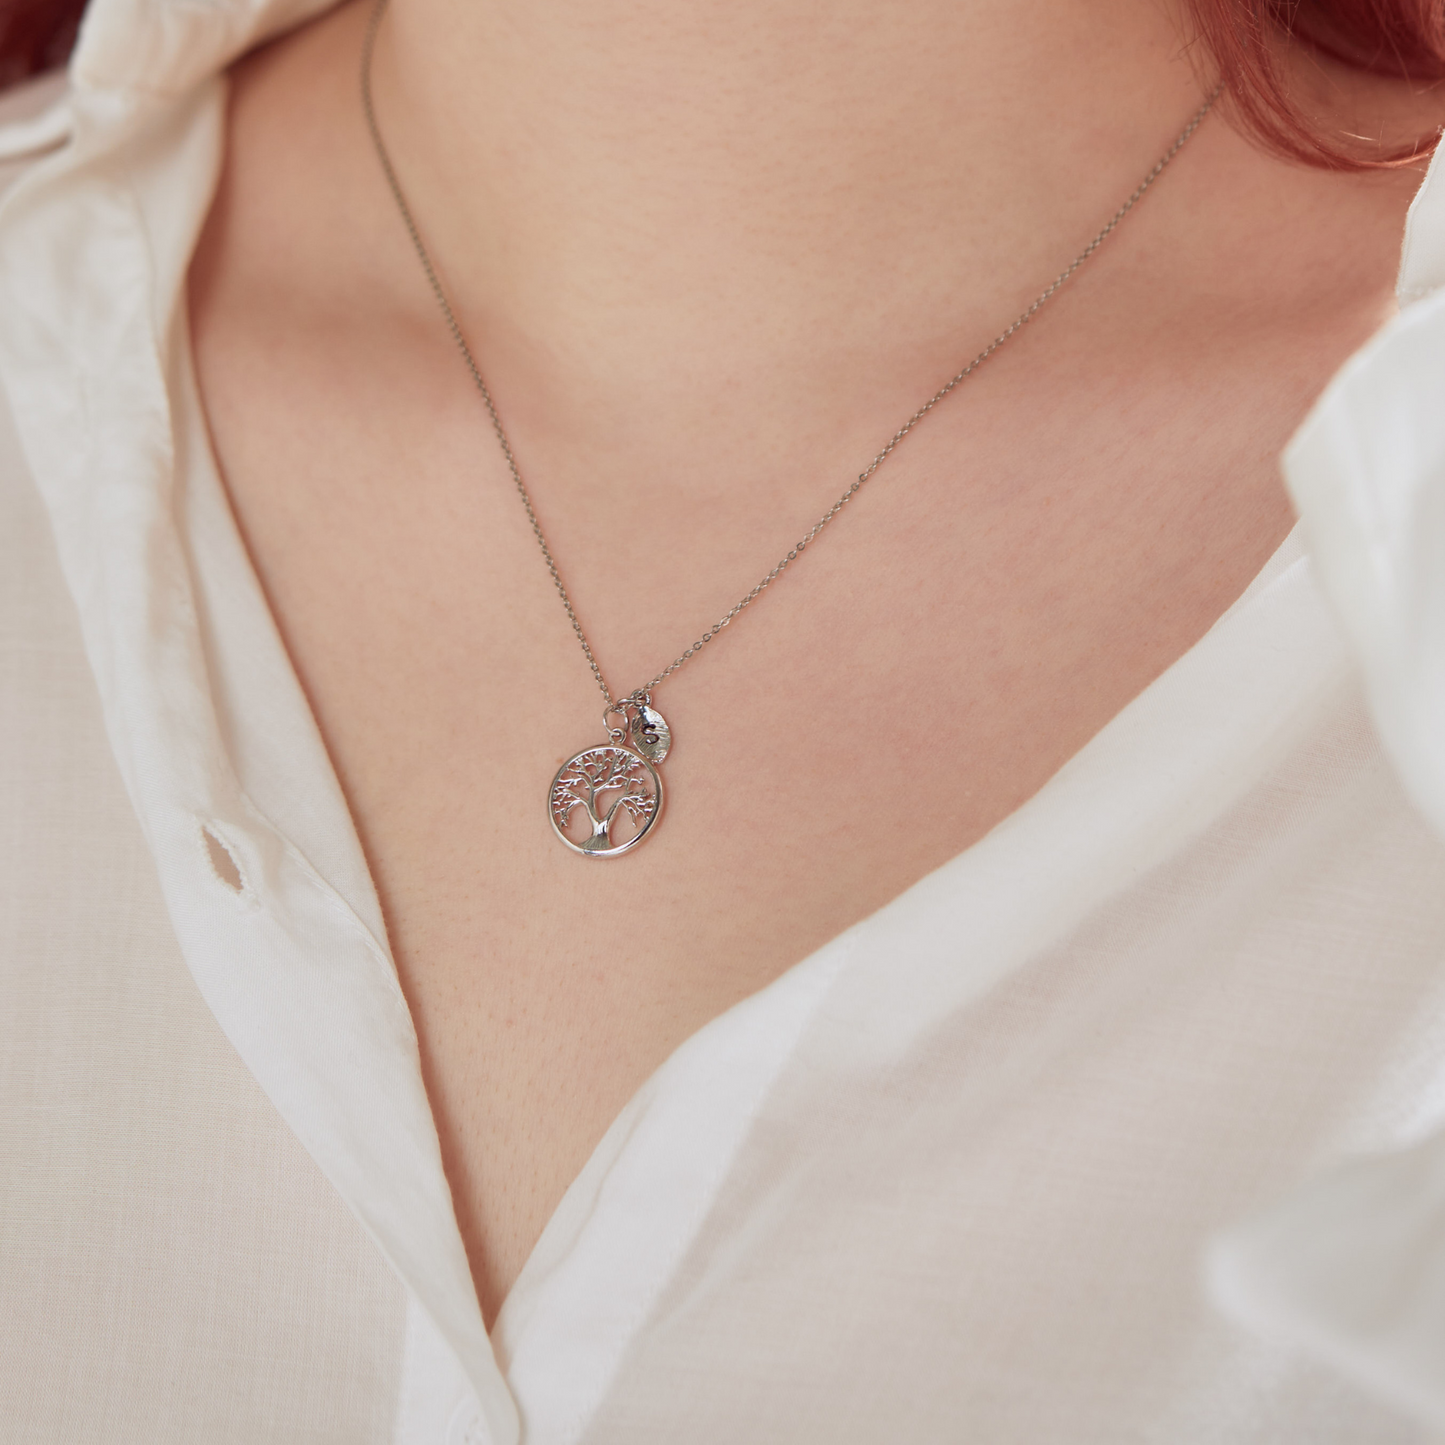 Namu Personalized Necklace